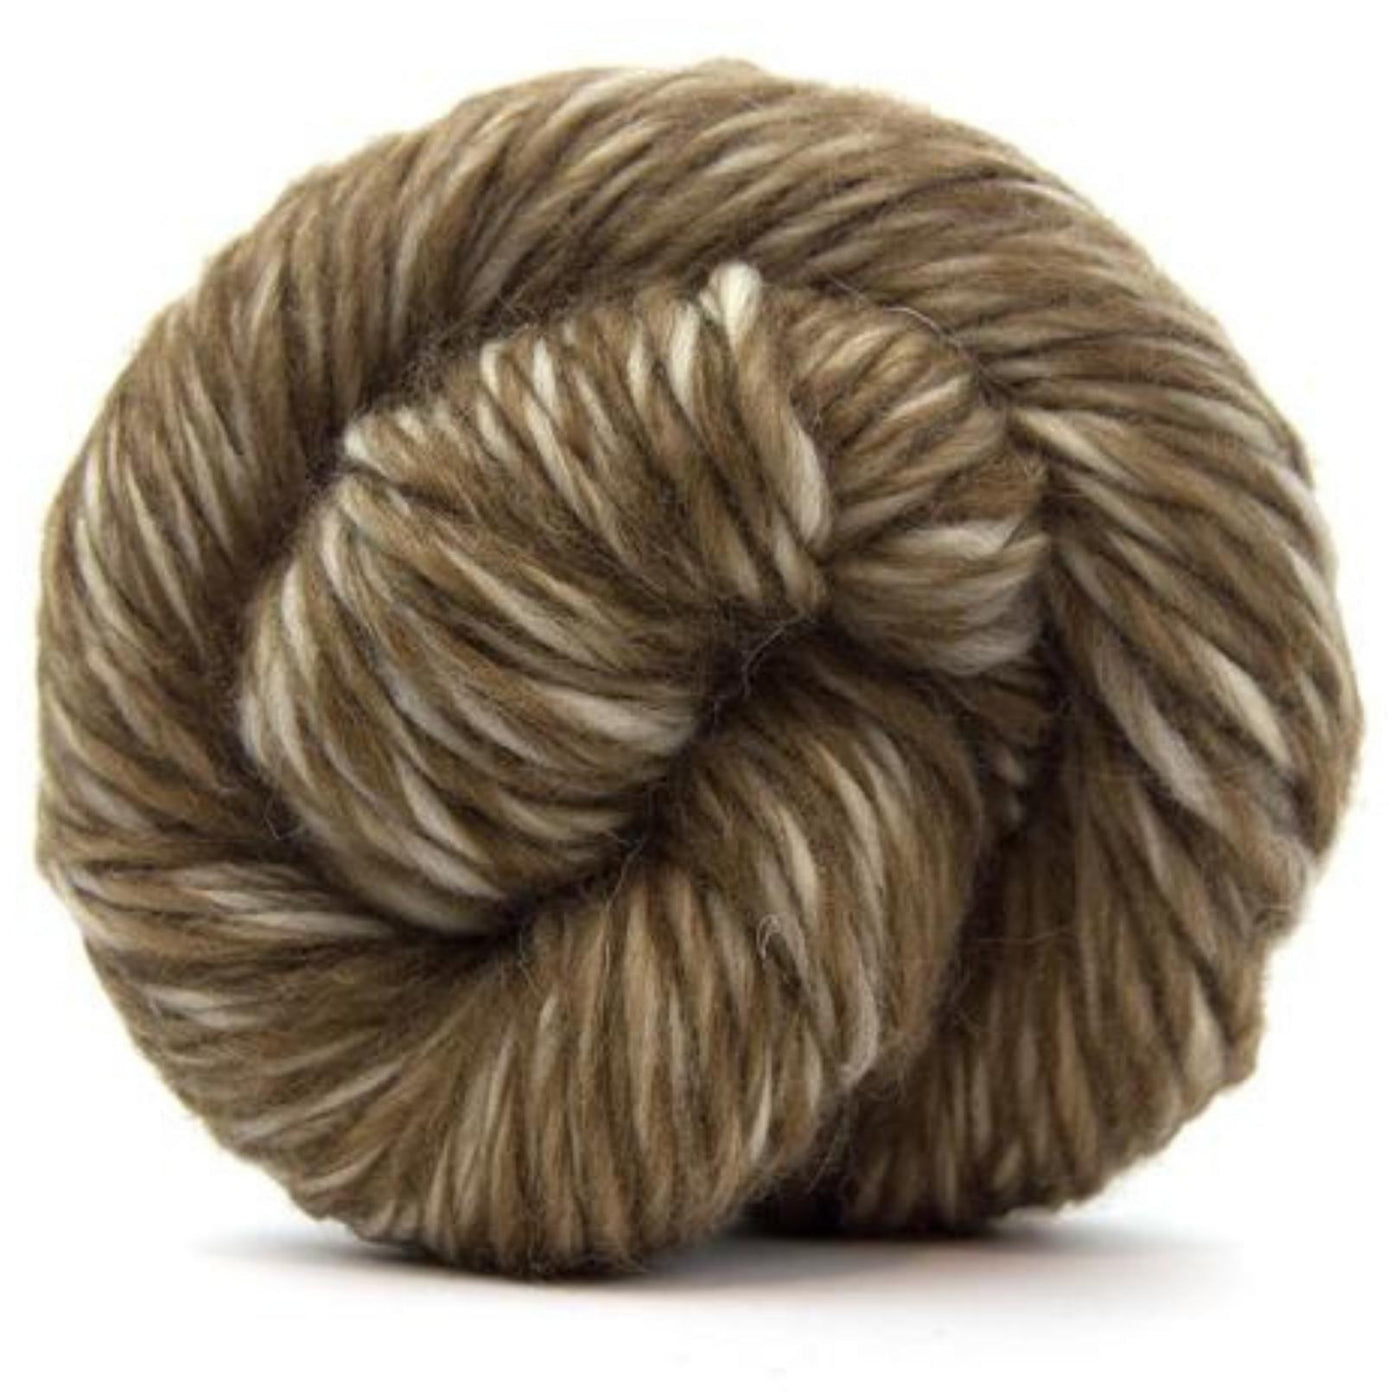 100% Merino Wool - Super Bulky Weight - Hank 200 Grams - Super Chunky Yarn  - Color Purple- Knitting Wool - Natural Yarn - Merino Wool- Yarn